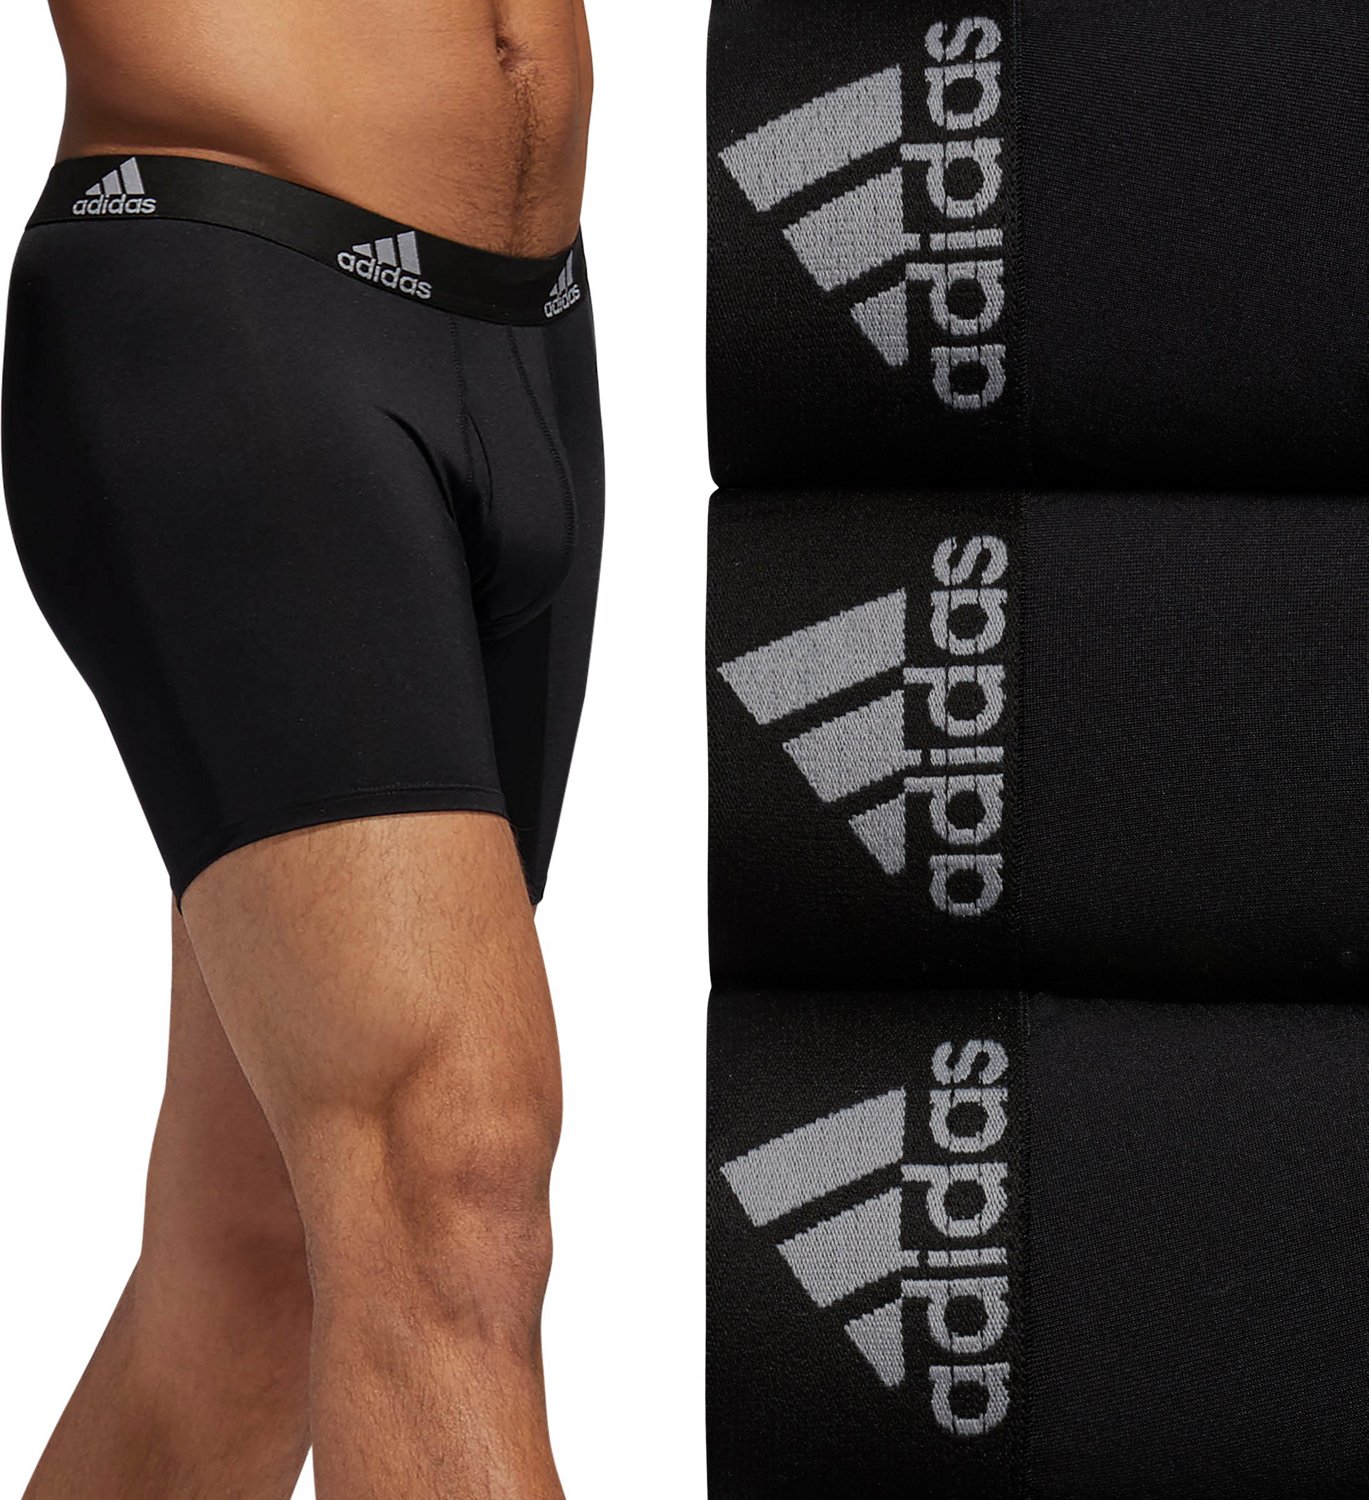 Adidas Performance Mesh Boxer Brief 2 Pk., Underwear, Clothing &  Accessories